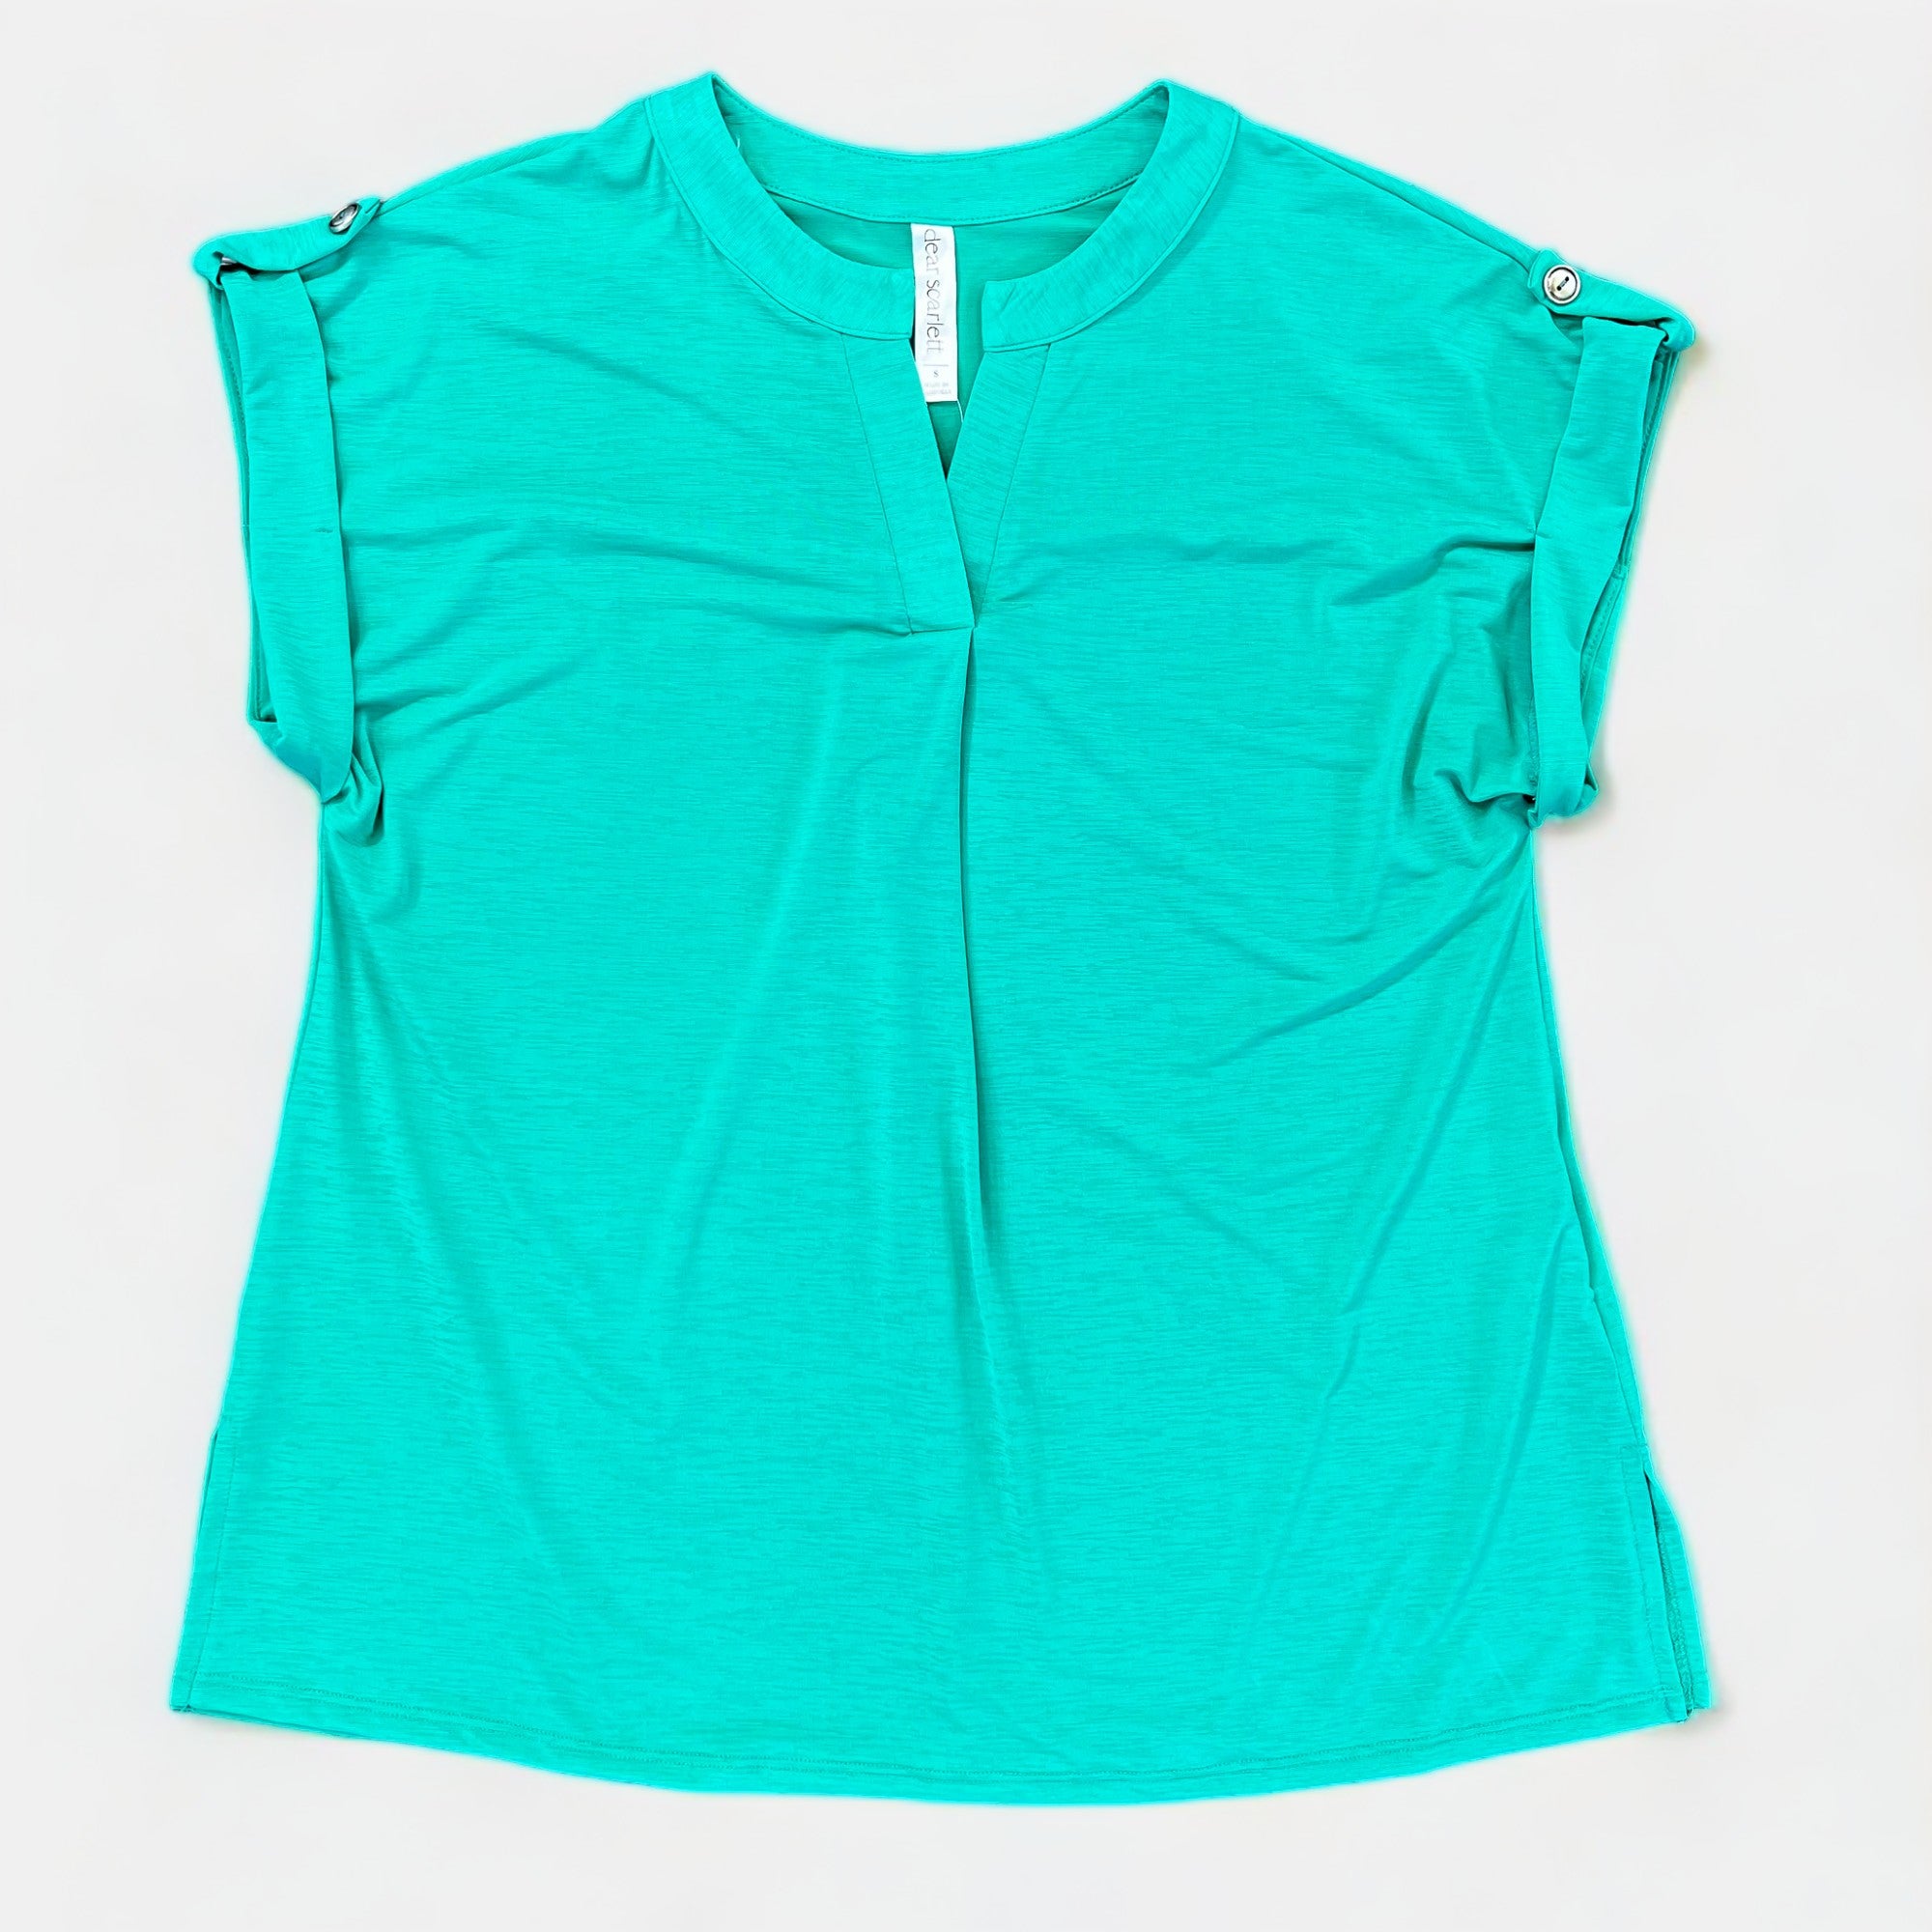 Emerald Lizzy Short Sleeve Top